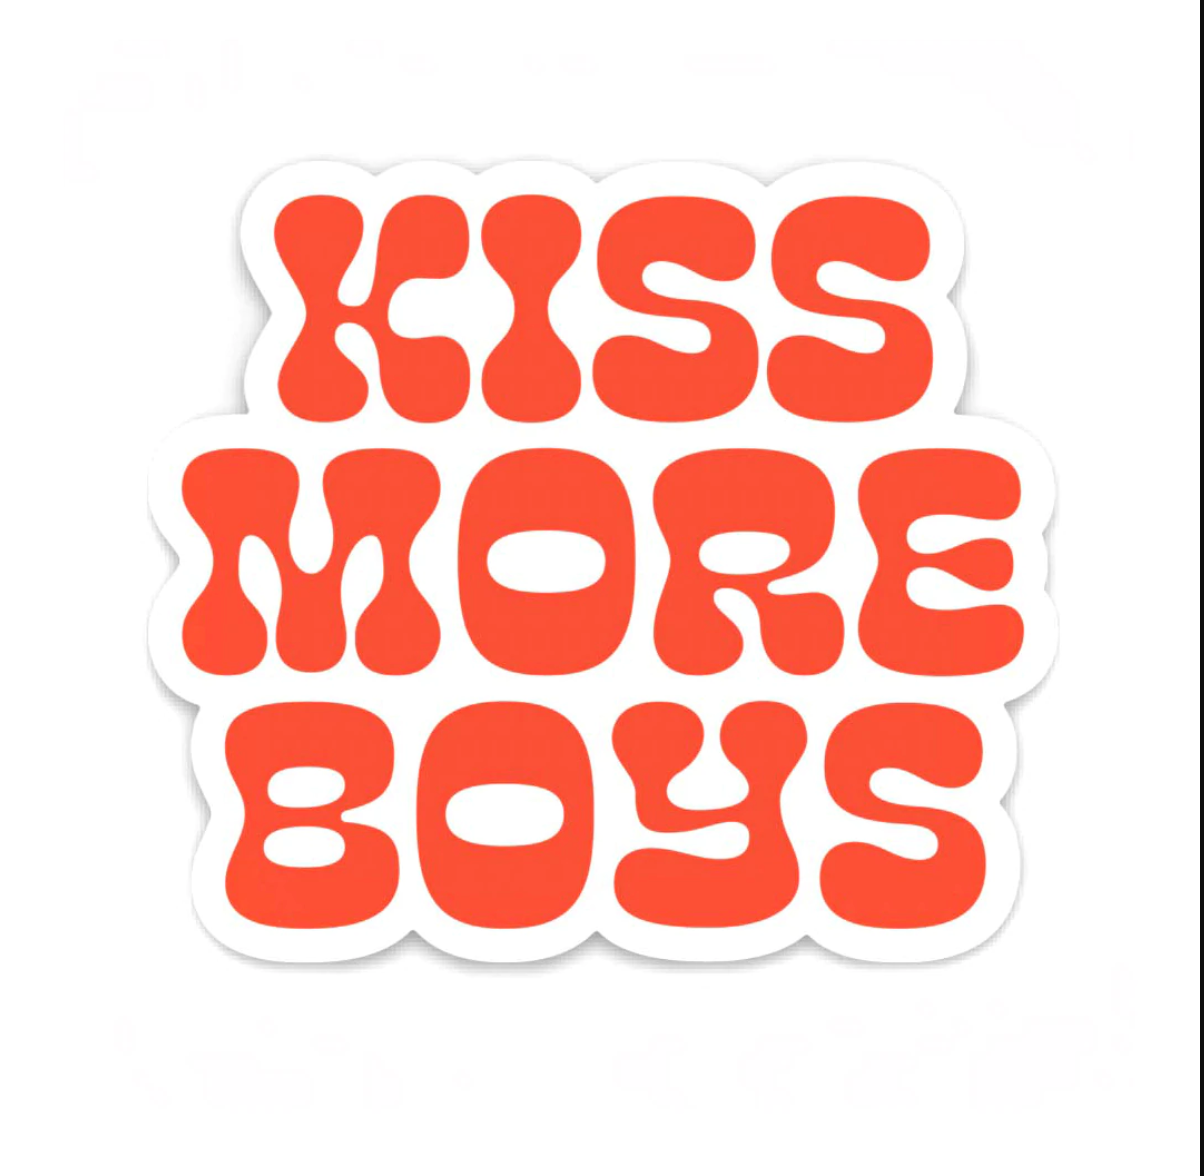 Kiss More Boys Sticker